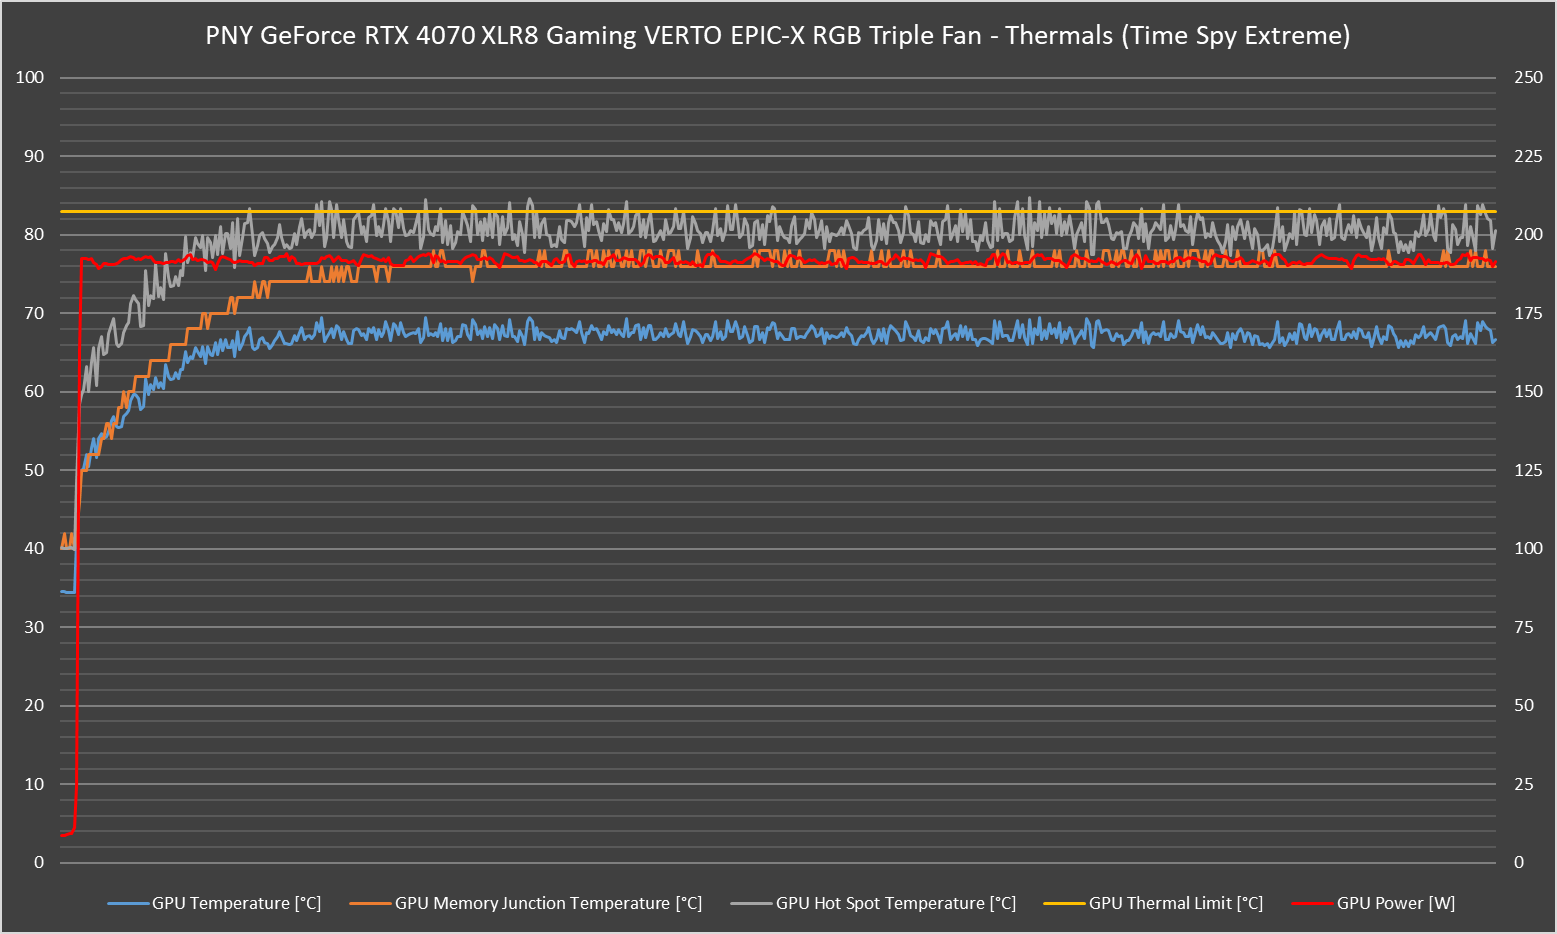 PNY GeForce RTX 4070 XLR8 Gaming VERTO EPIC-X RGB Triple Fan Review - Sticker Shock 40